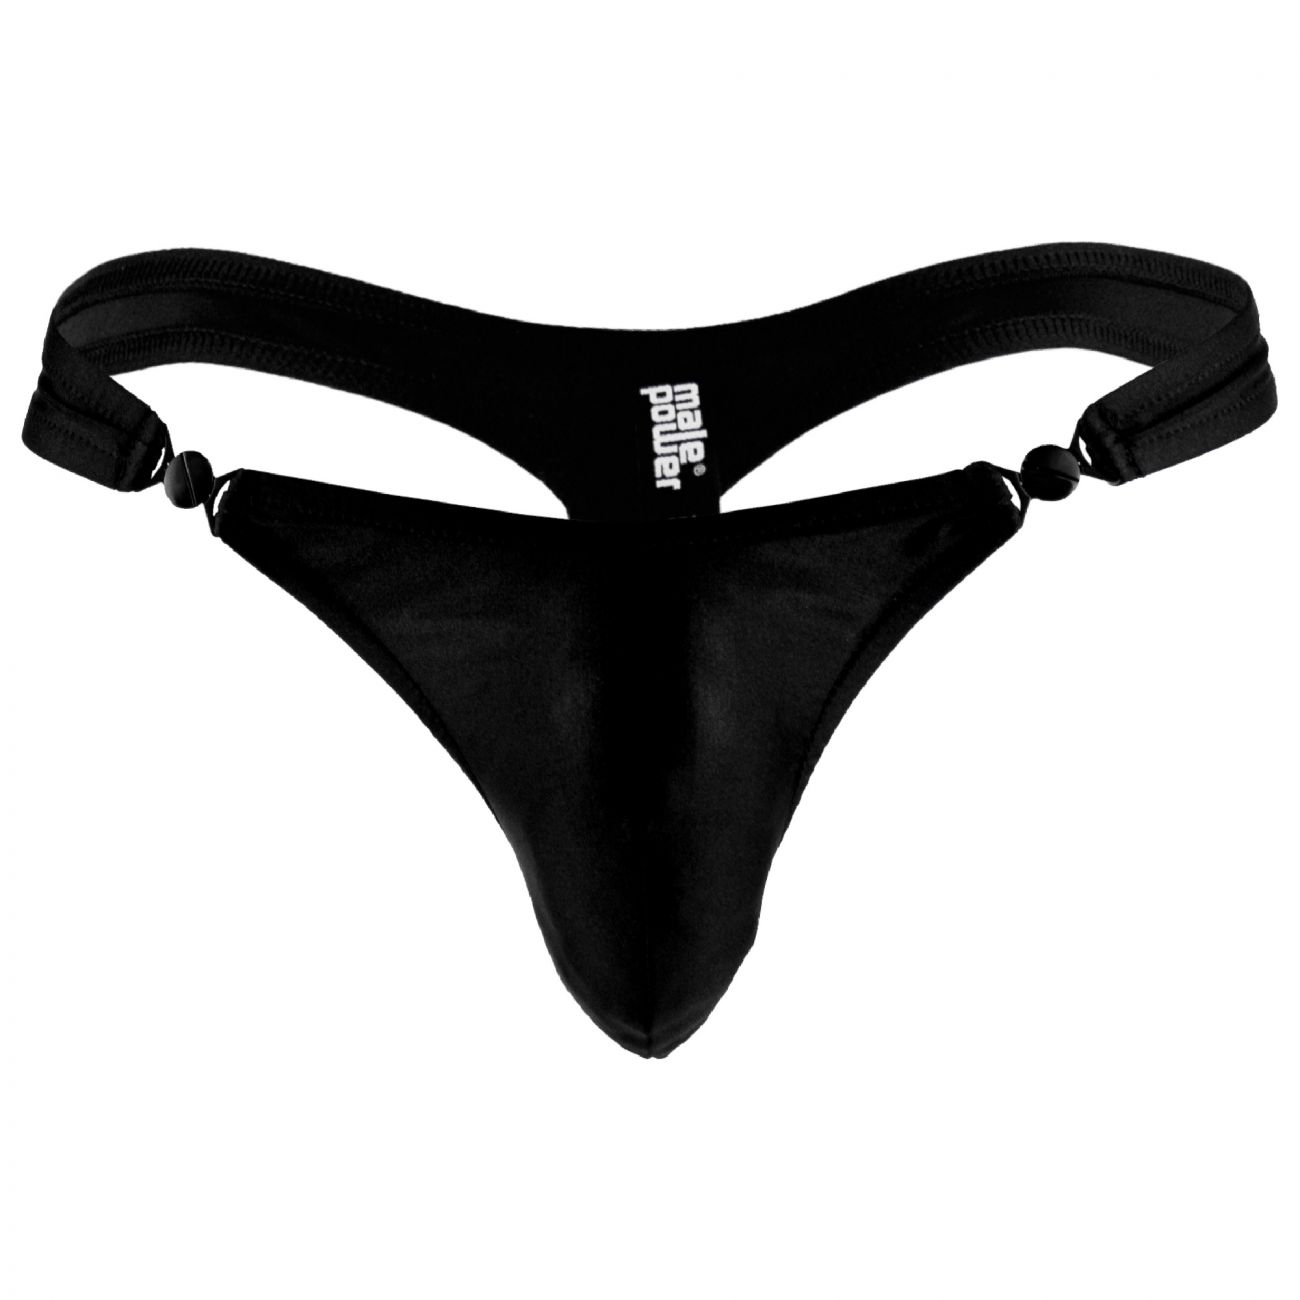 Mens Underwear: Male Power PAK820 Bong Clip Thong | eBay